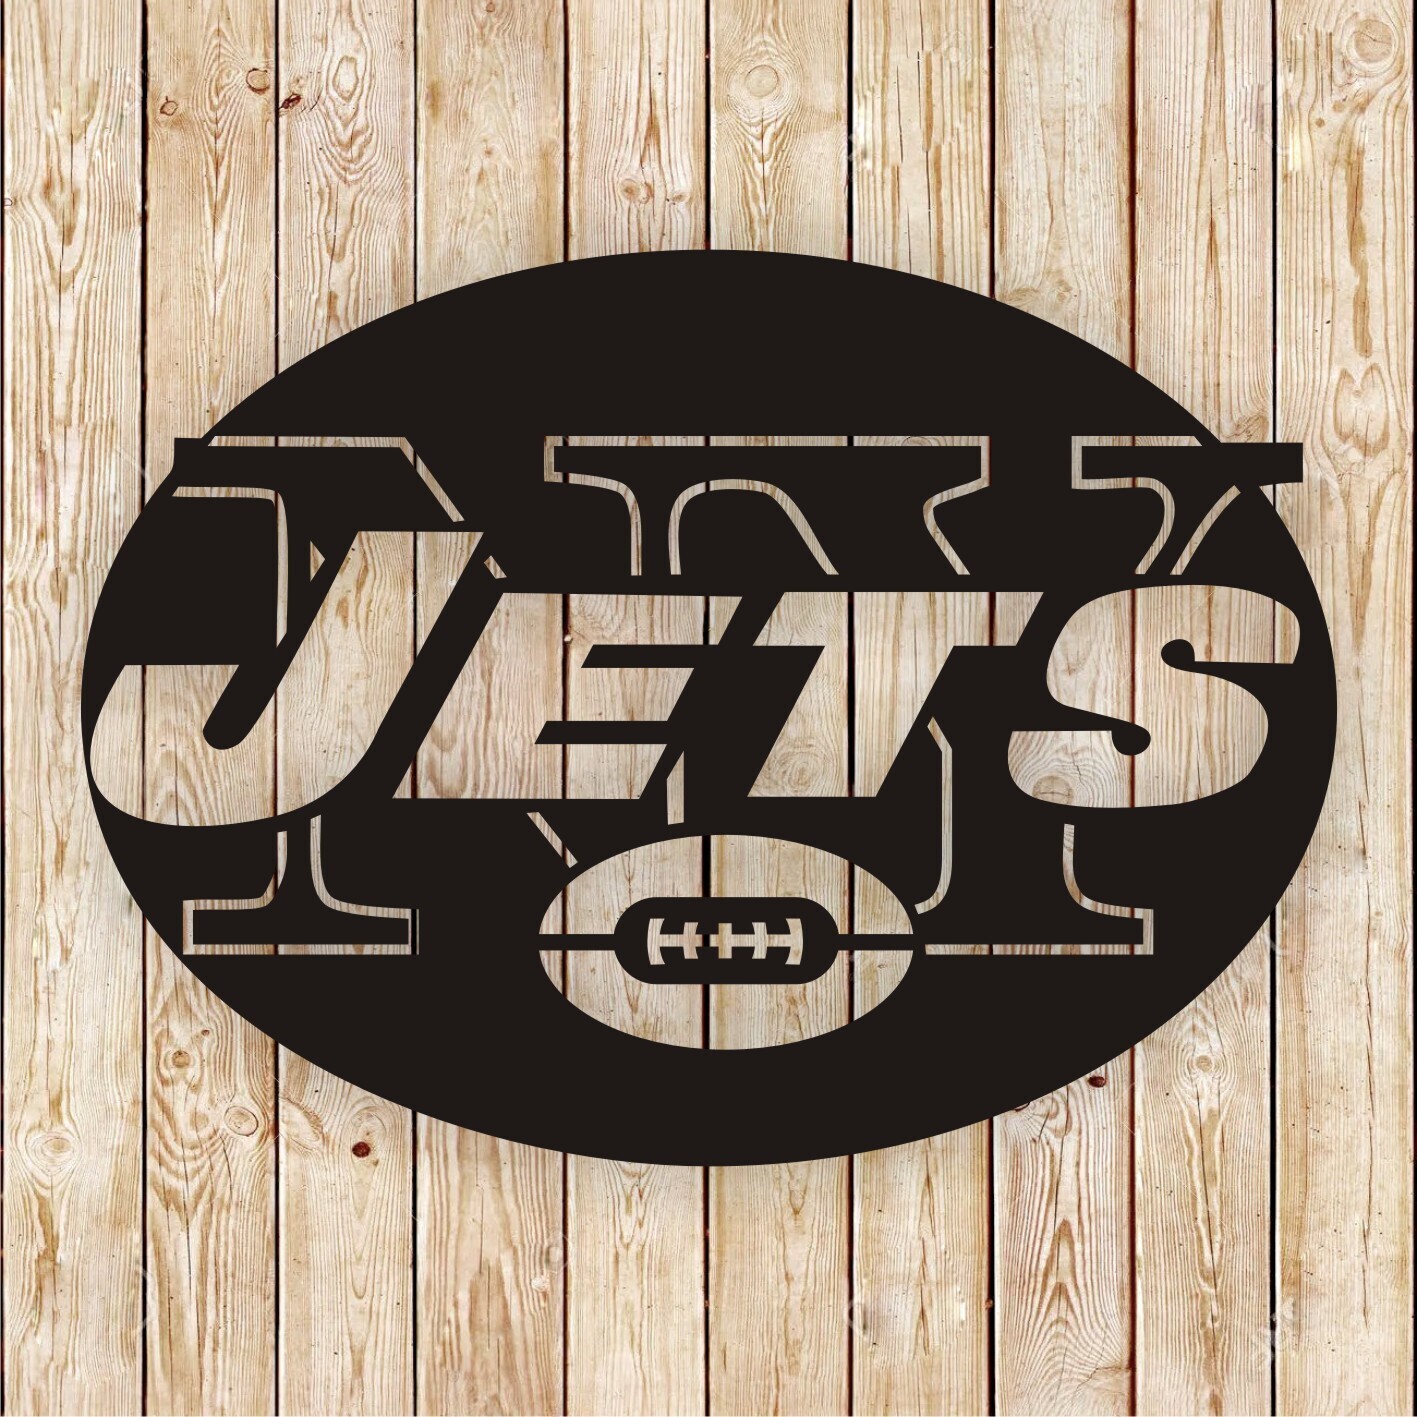 NFL New York Jets logo cutting file